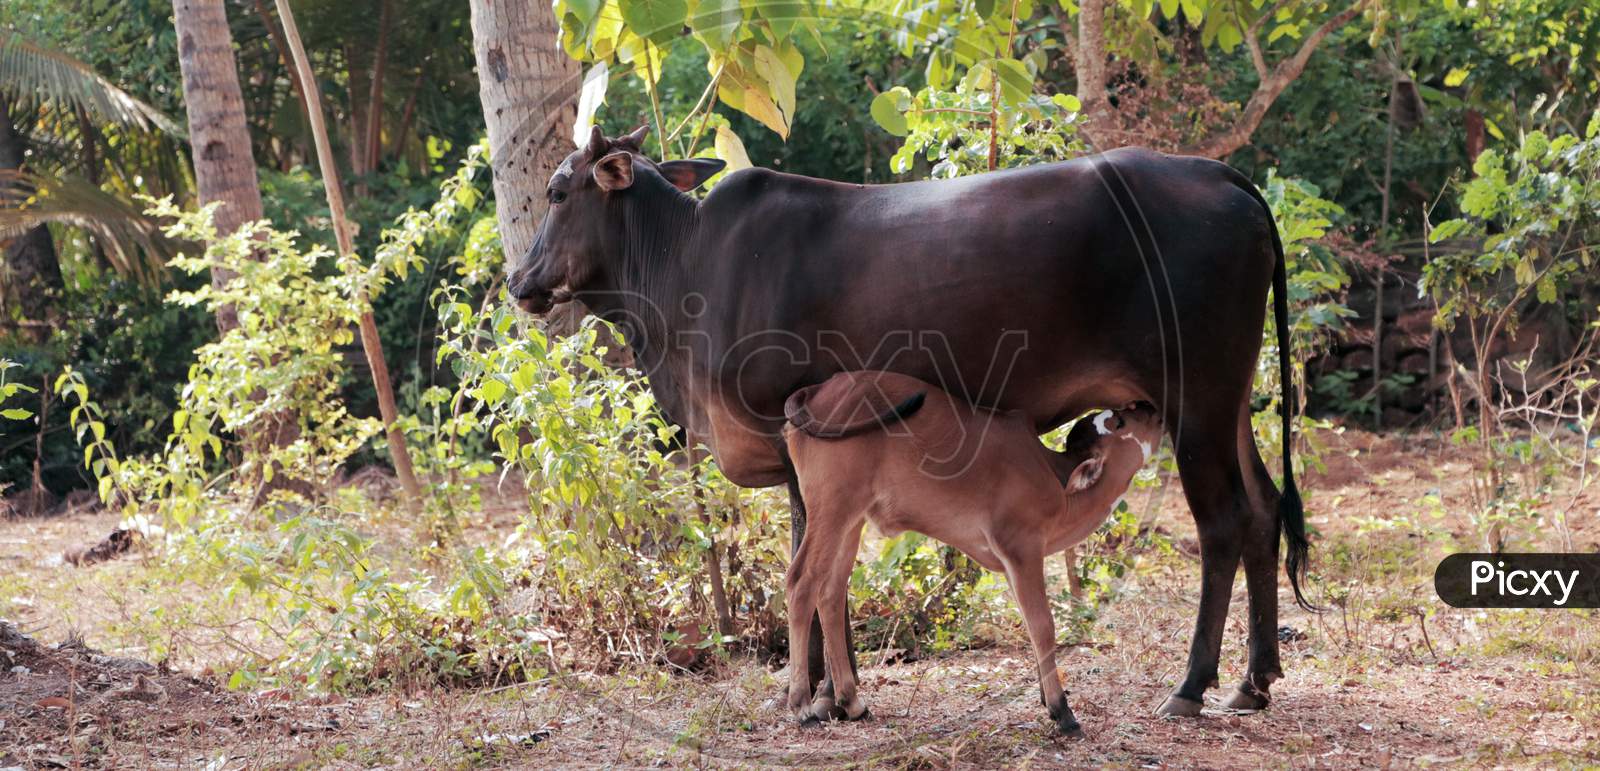 Cow feeding her baby calf